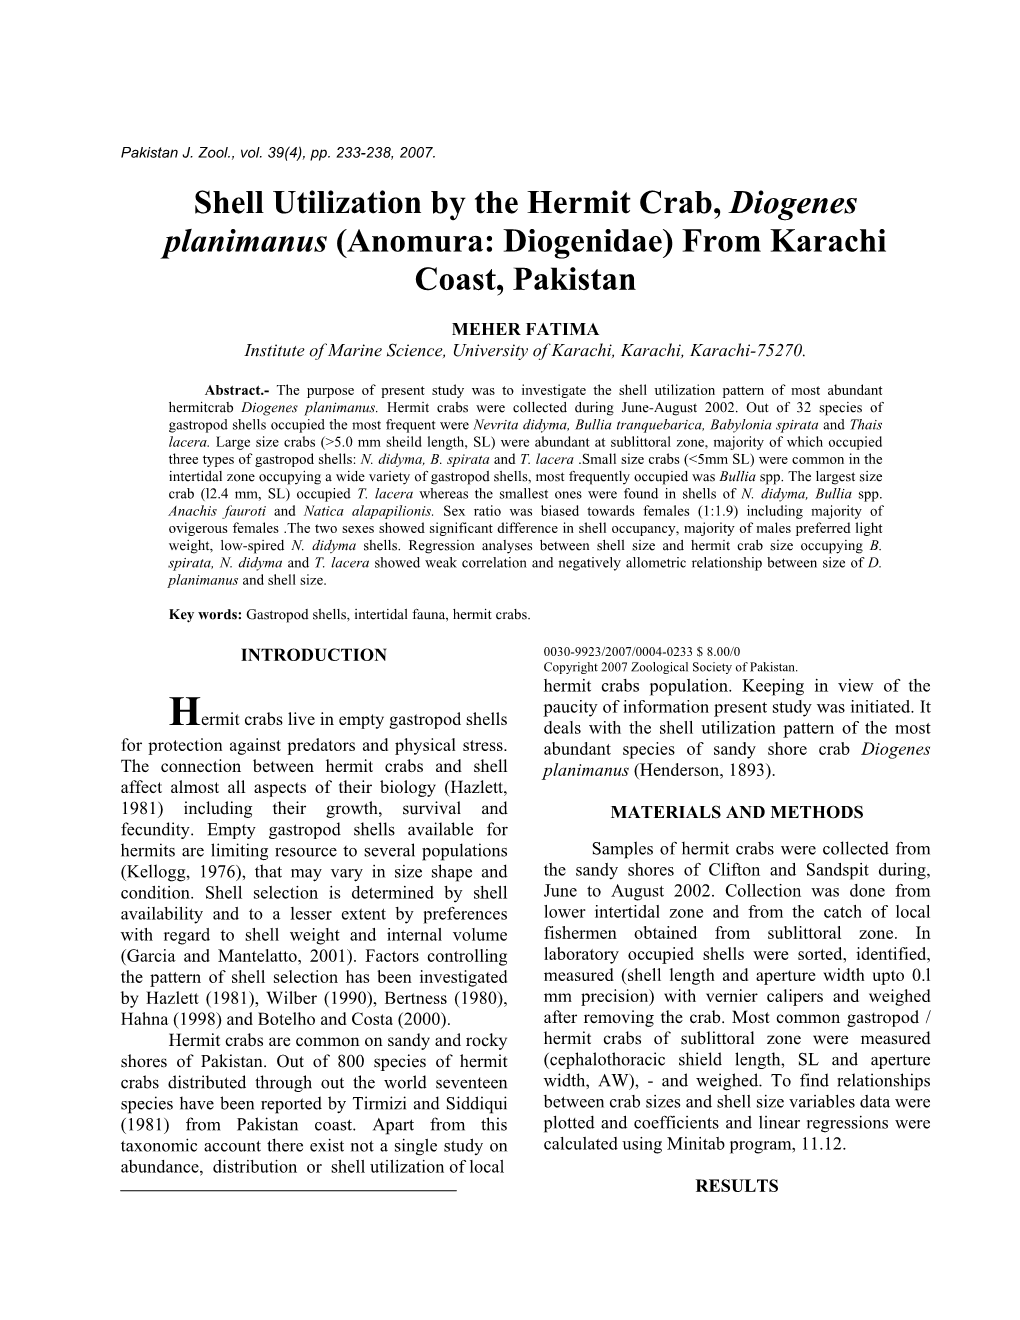 Shell Utilization by the Hermit Crab, Diogenes Planimanus (Anomura: Diogenidae) from Karachi Coast, Pakistan